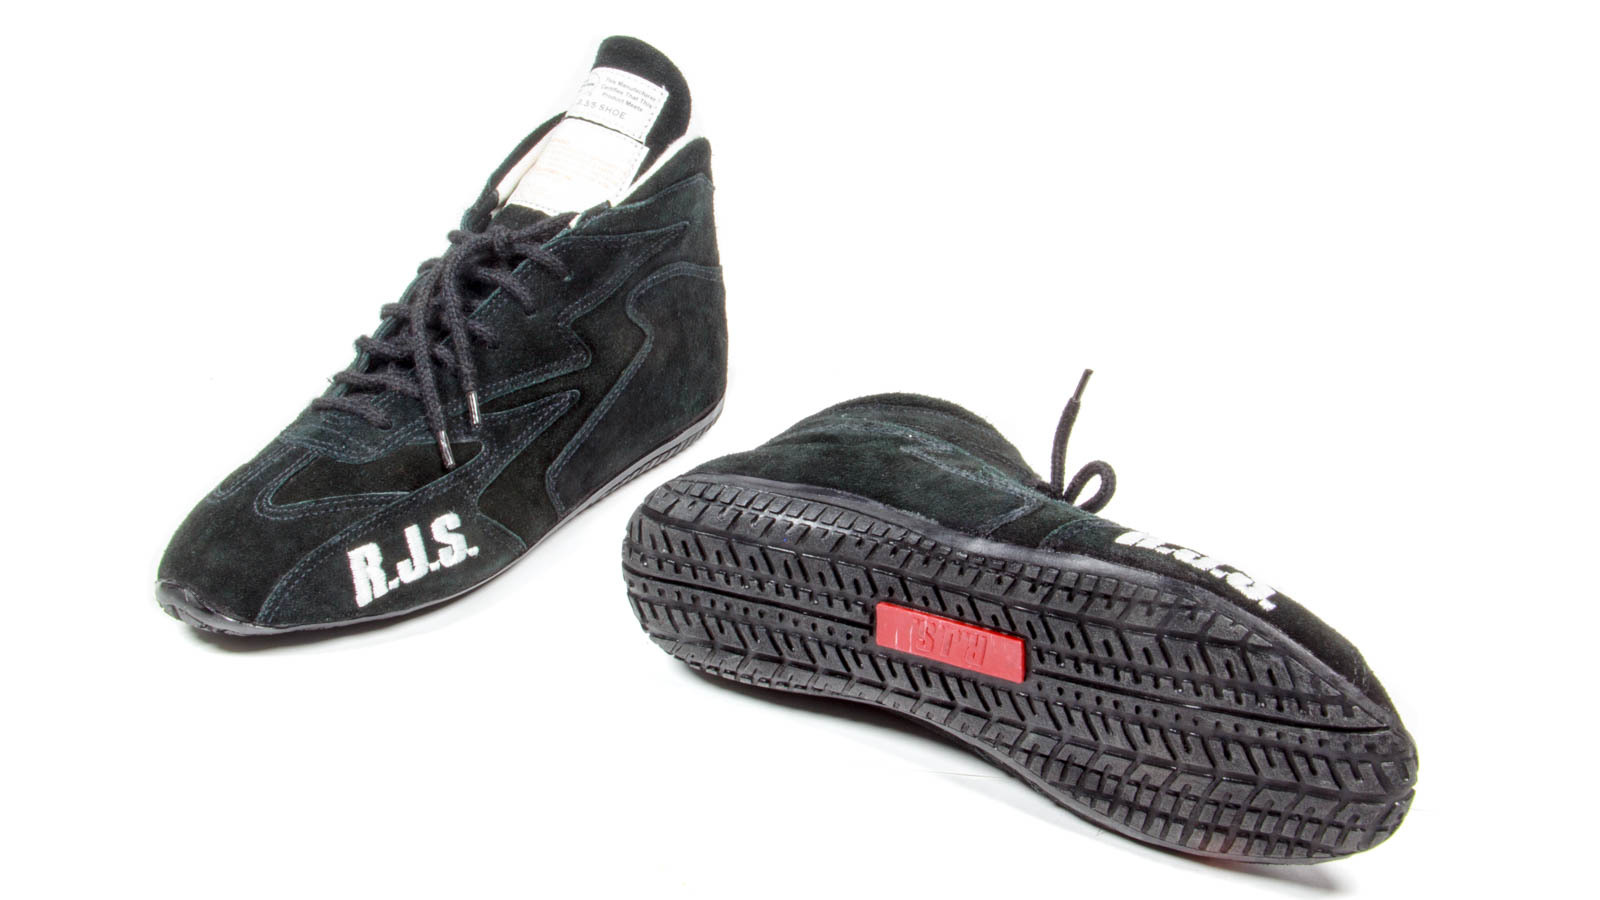 RJS, Redline Racing Shoe Mid-Top Black Size 8 SFI-5